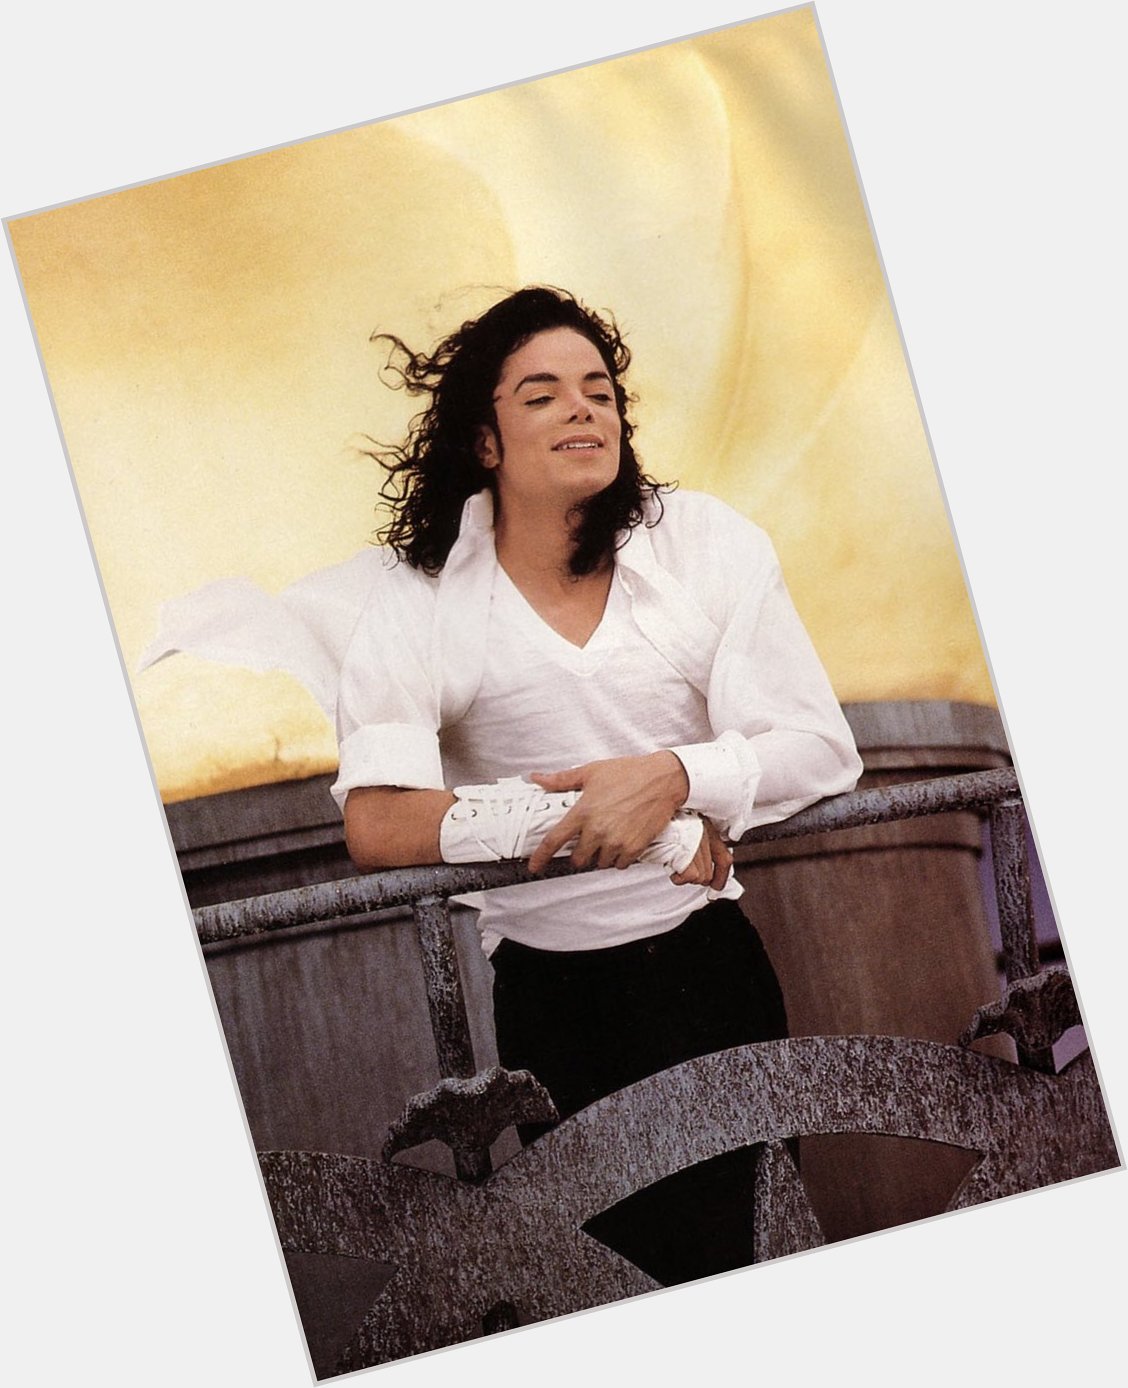 Happy Birthday Michael Jackson 
Celebrate your birthday  